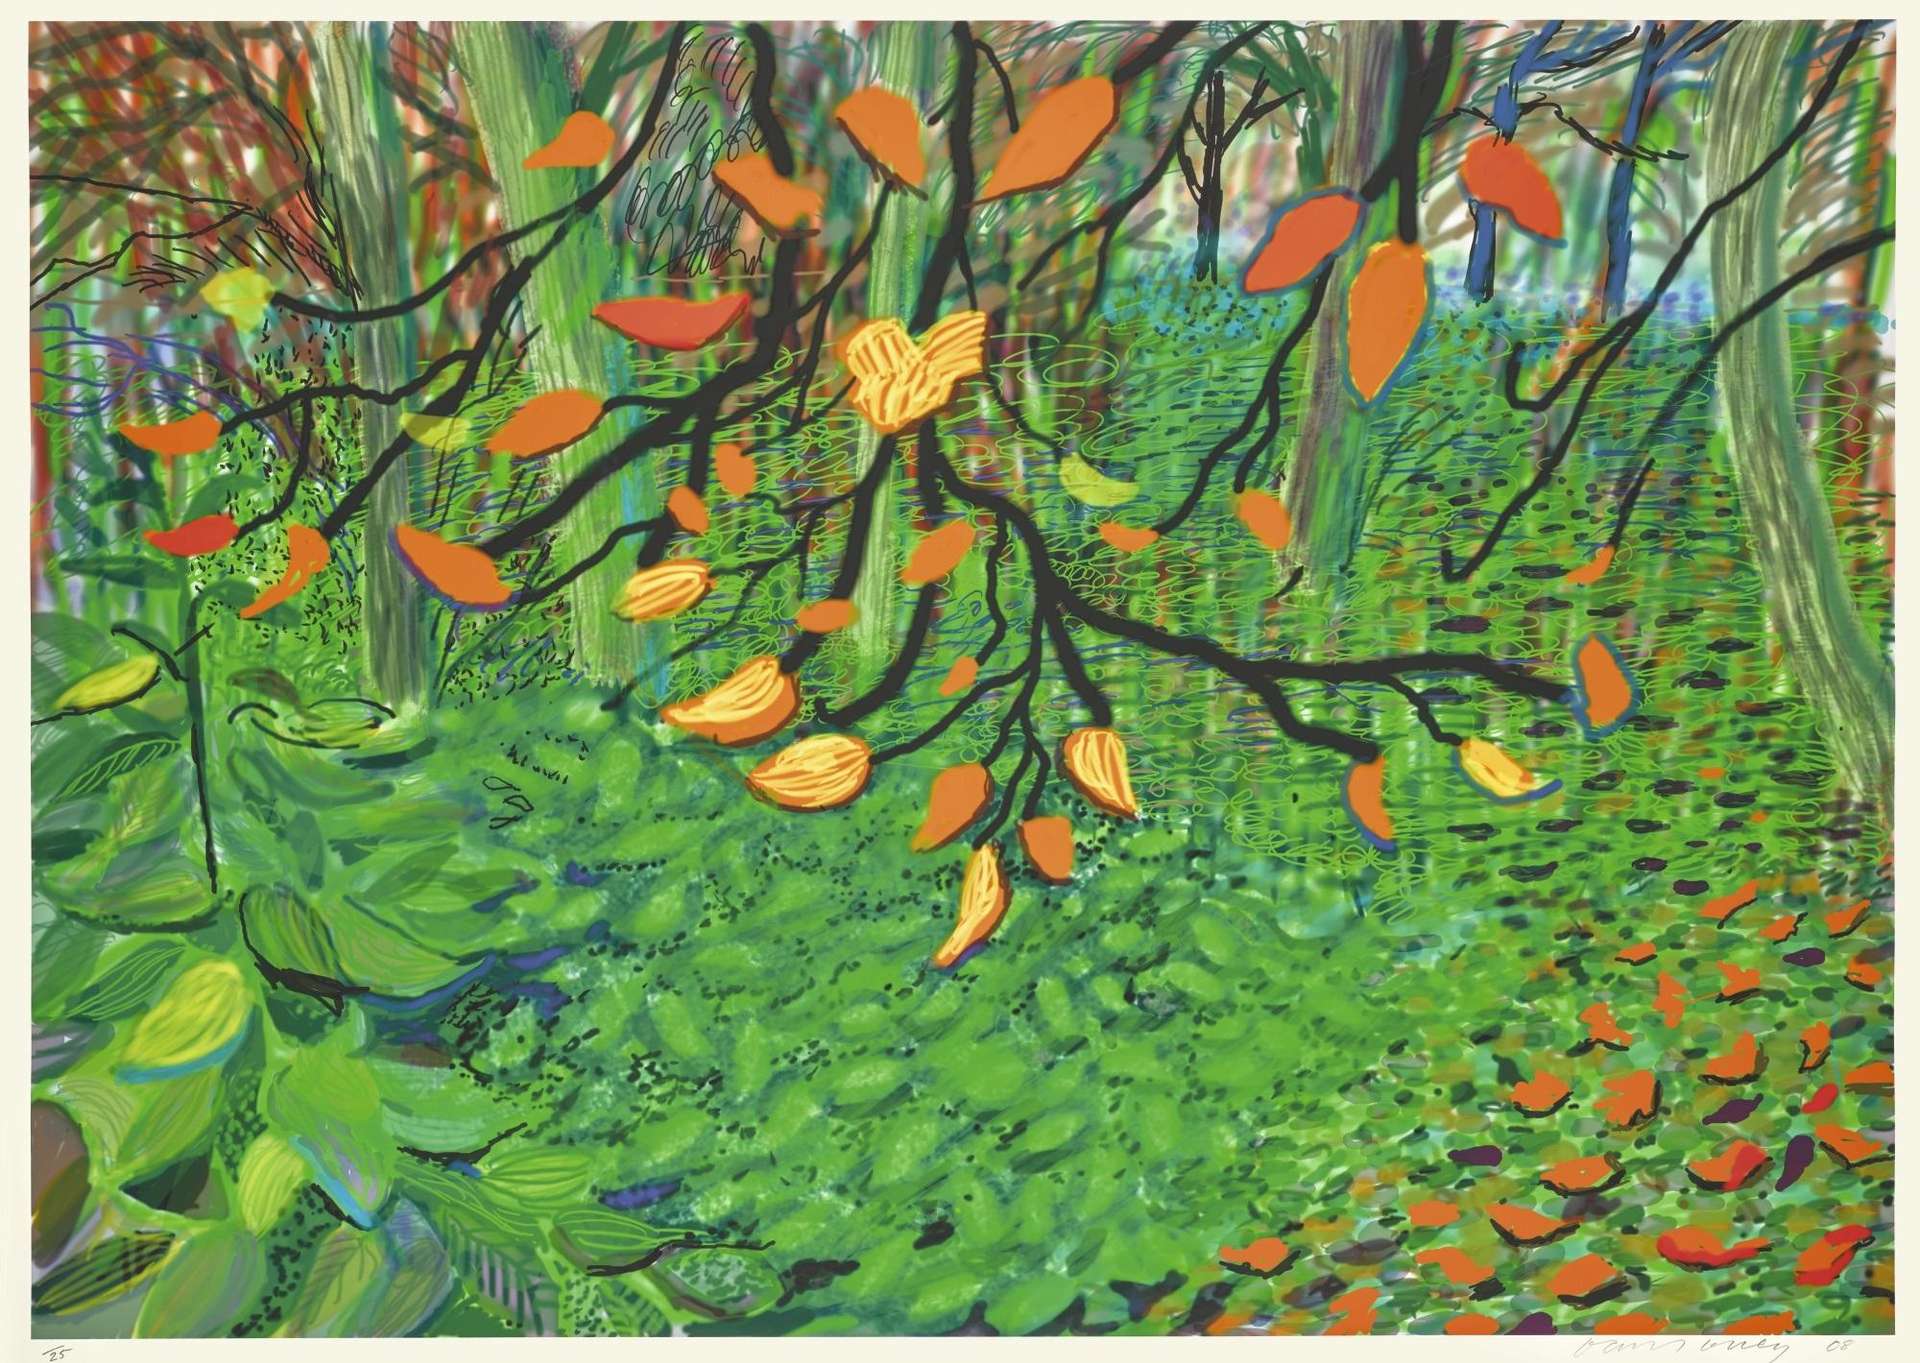 Autumn Leaves by David Hockney